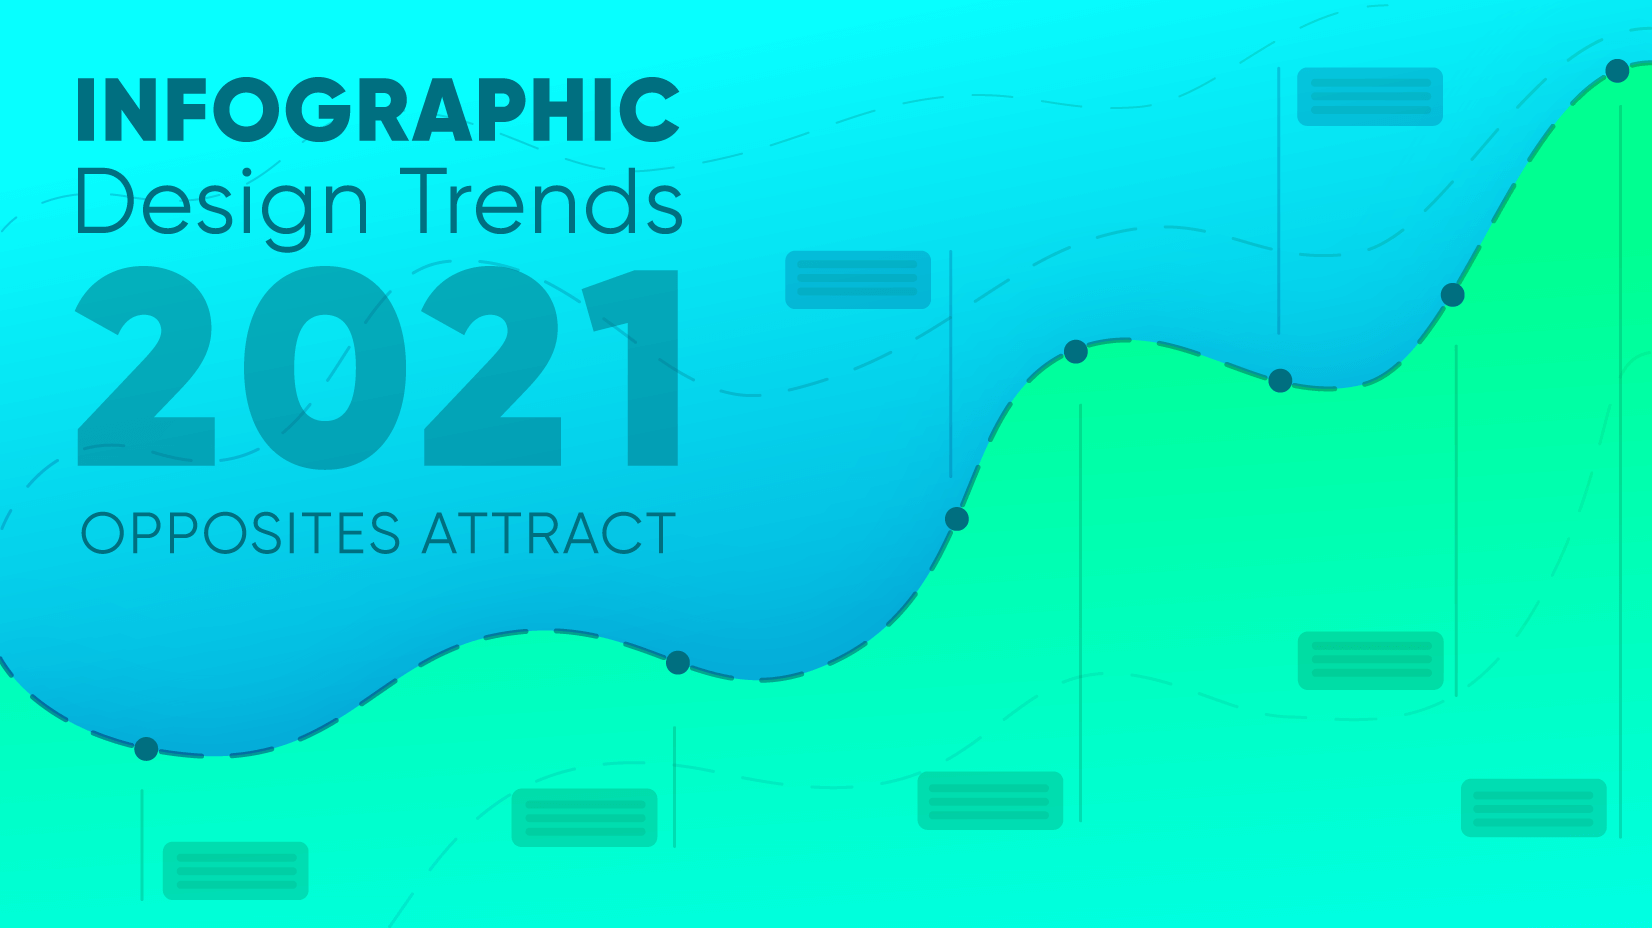 2021 Infographic 資訊圖表的設計趨勢 by Al Boicheva